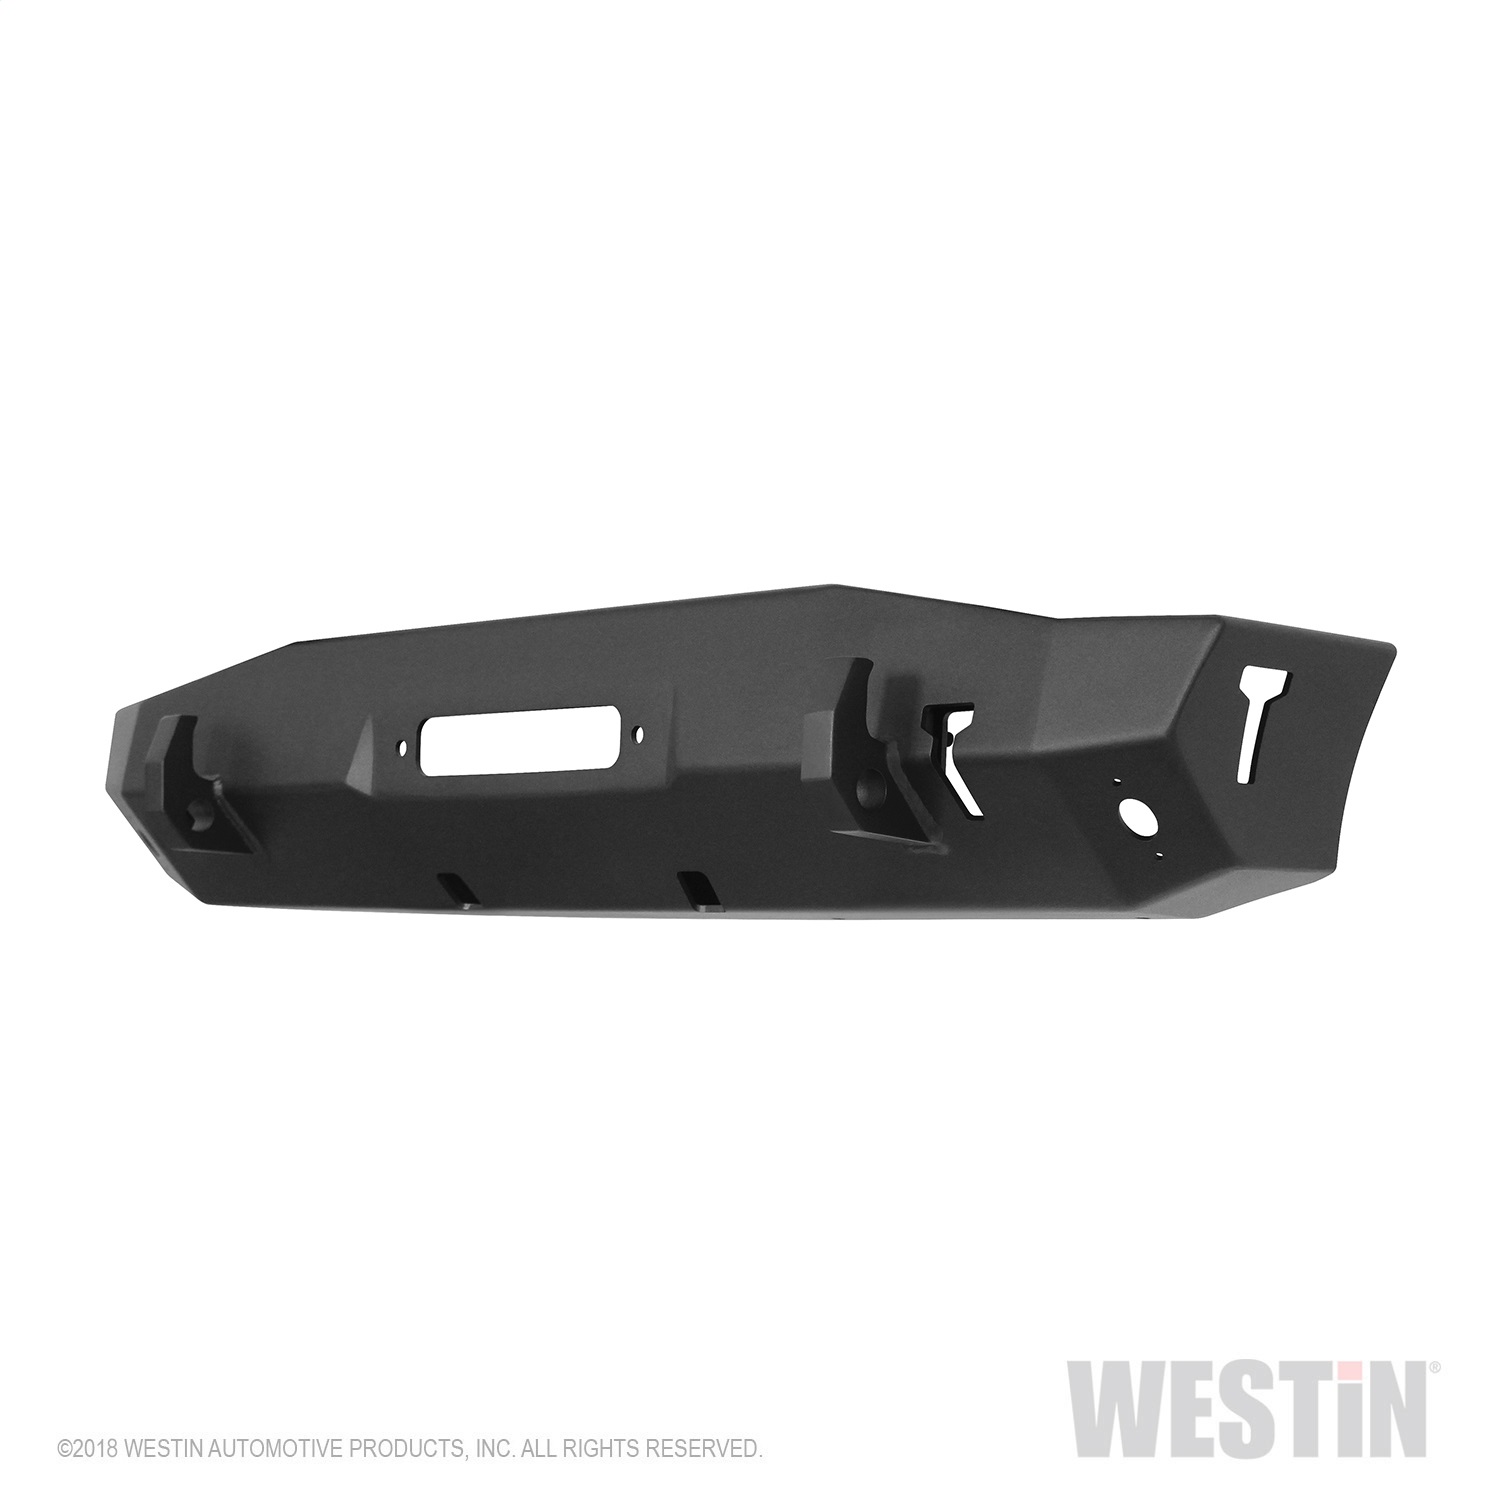 Westin 59-80005 WJ2 Stubby Front Bumper w/Bull Bar Fits 07-18 Wrangler (JK)